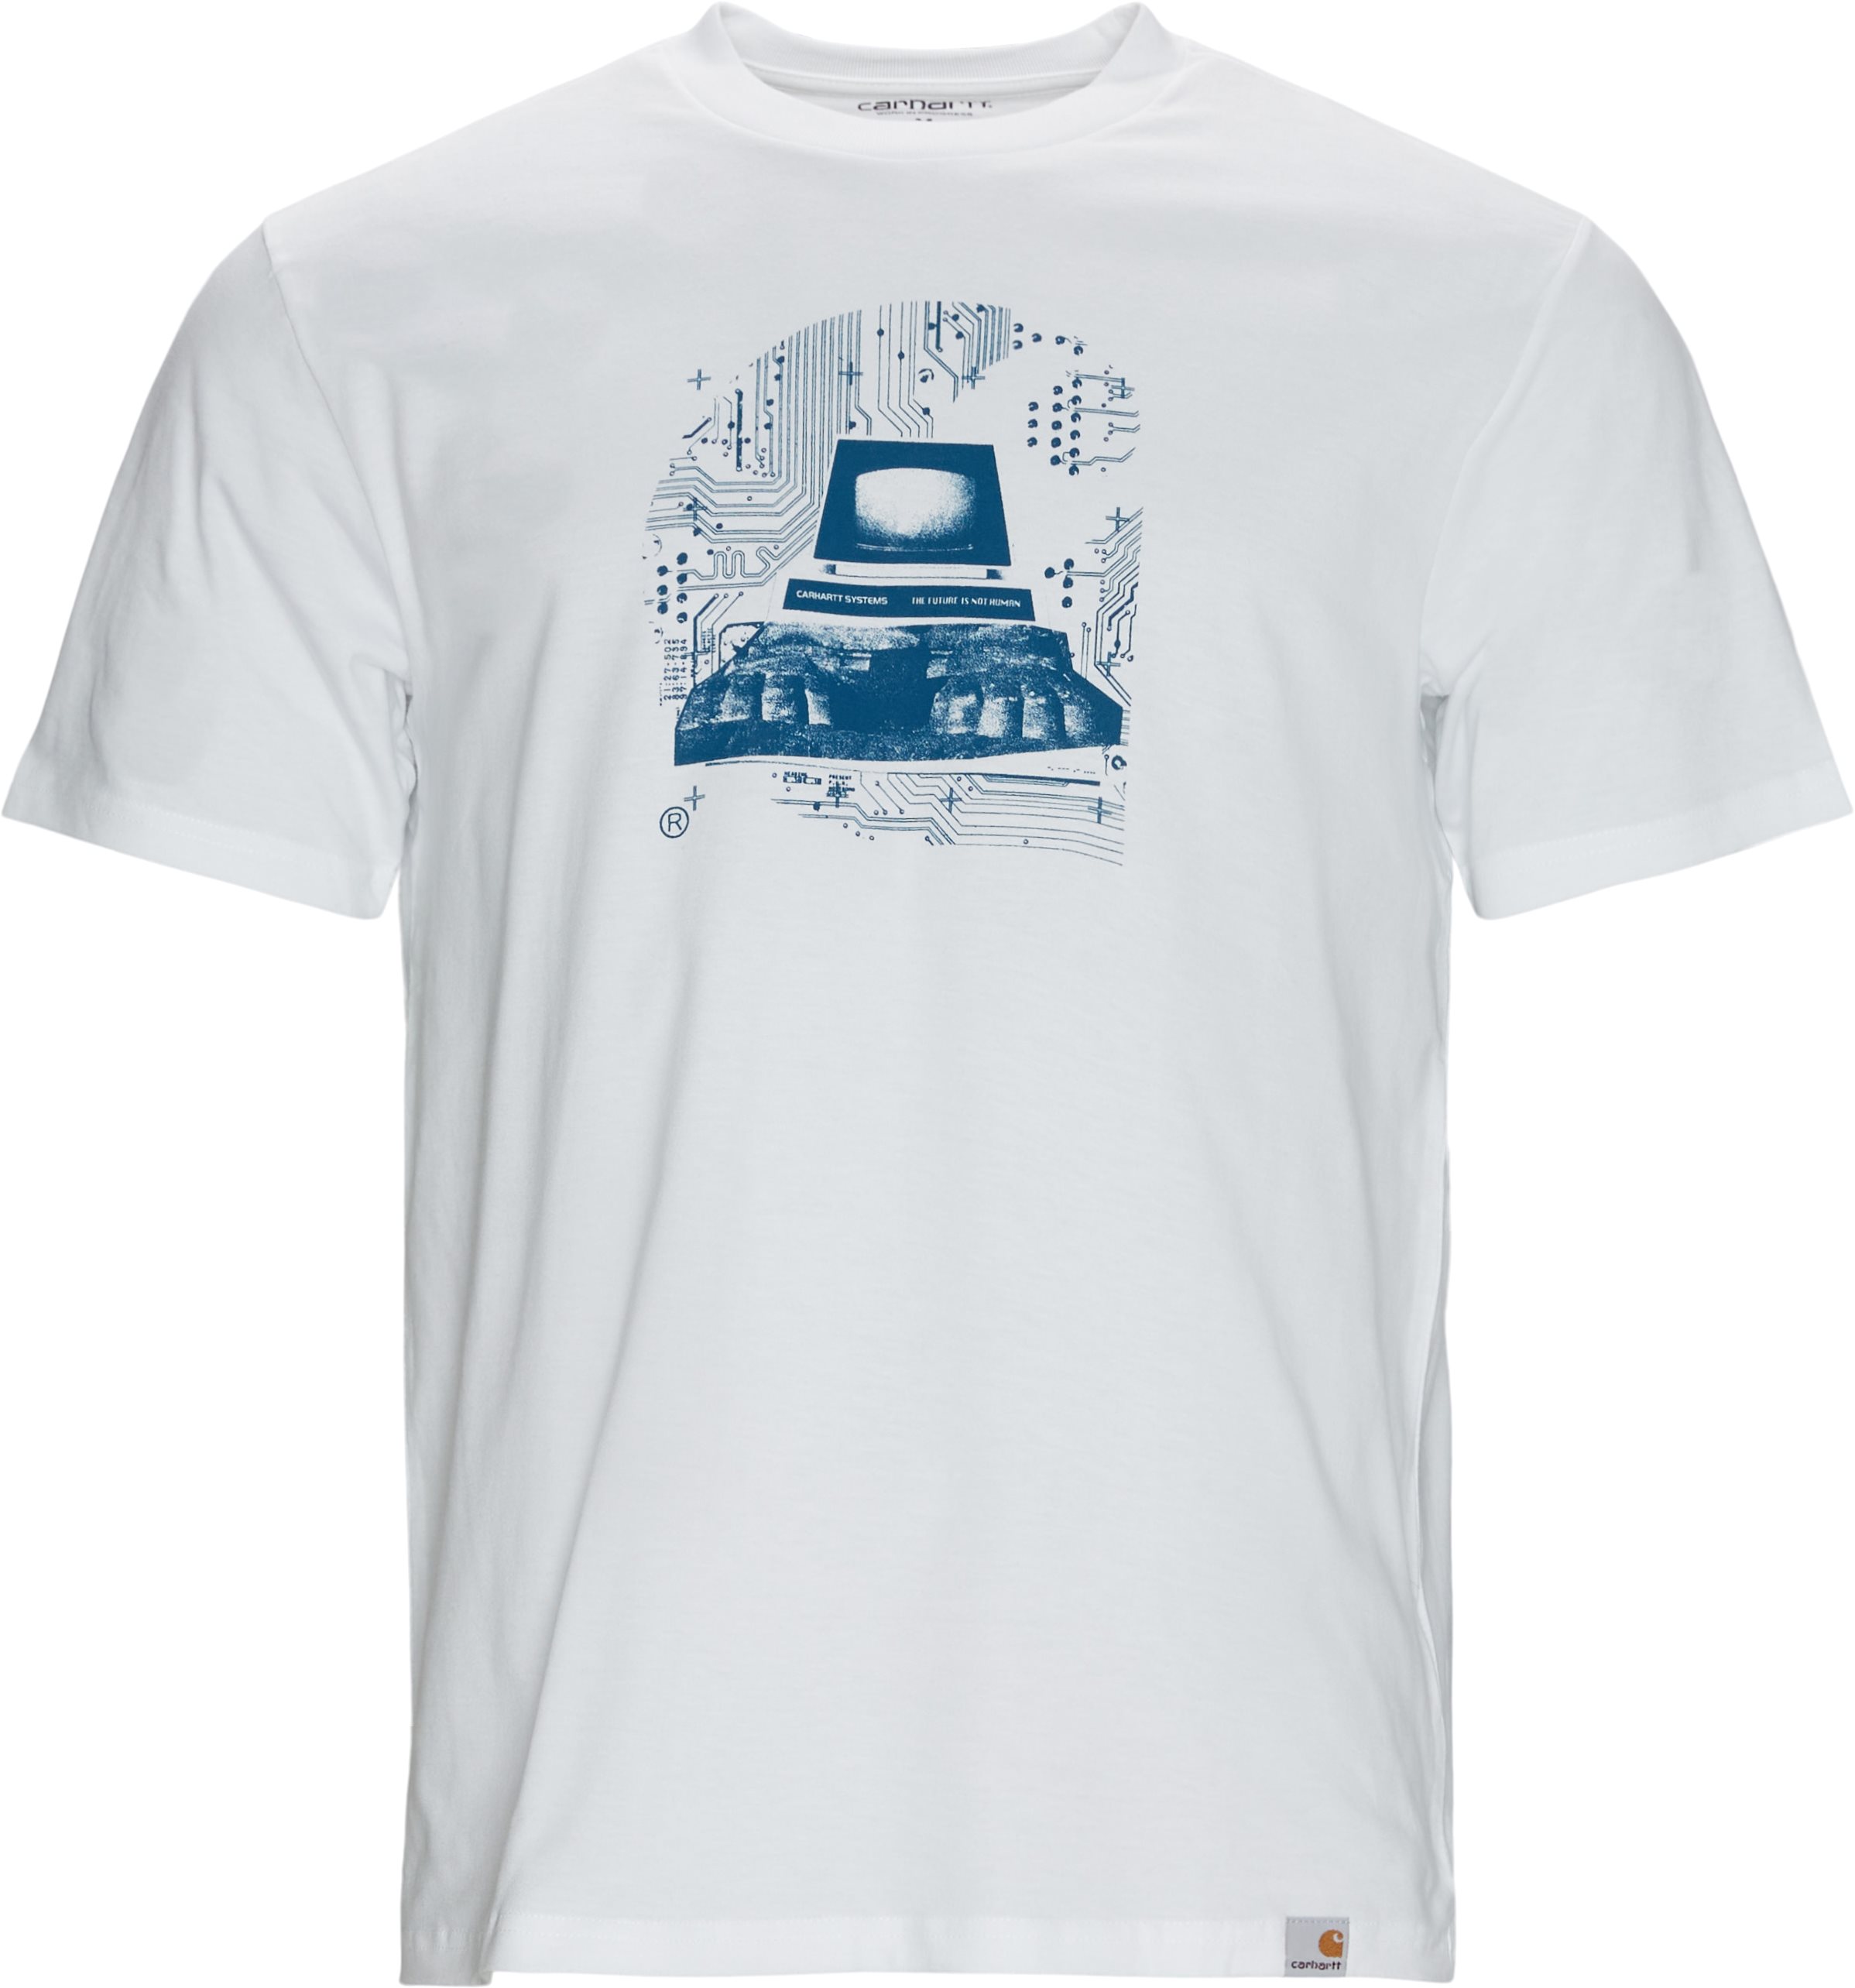 Systems C tee - T-shirts - Regular fit - Vit